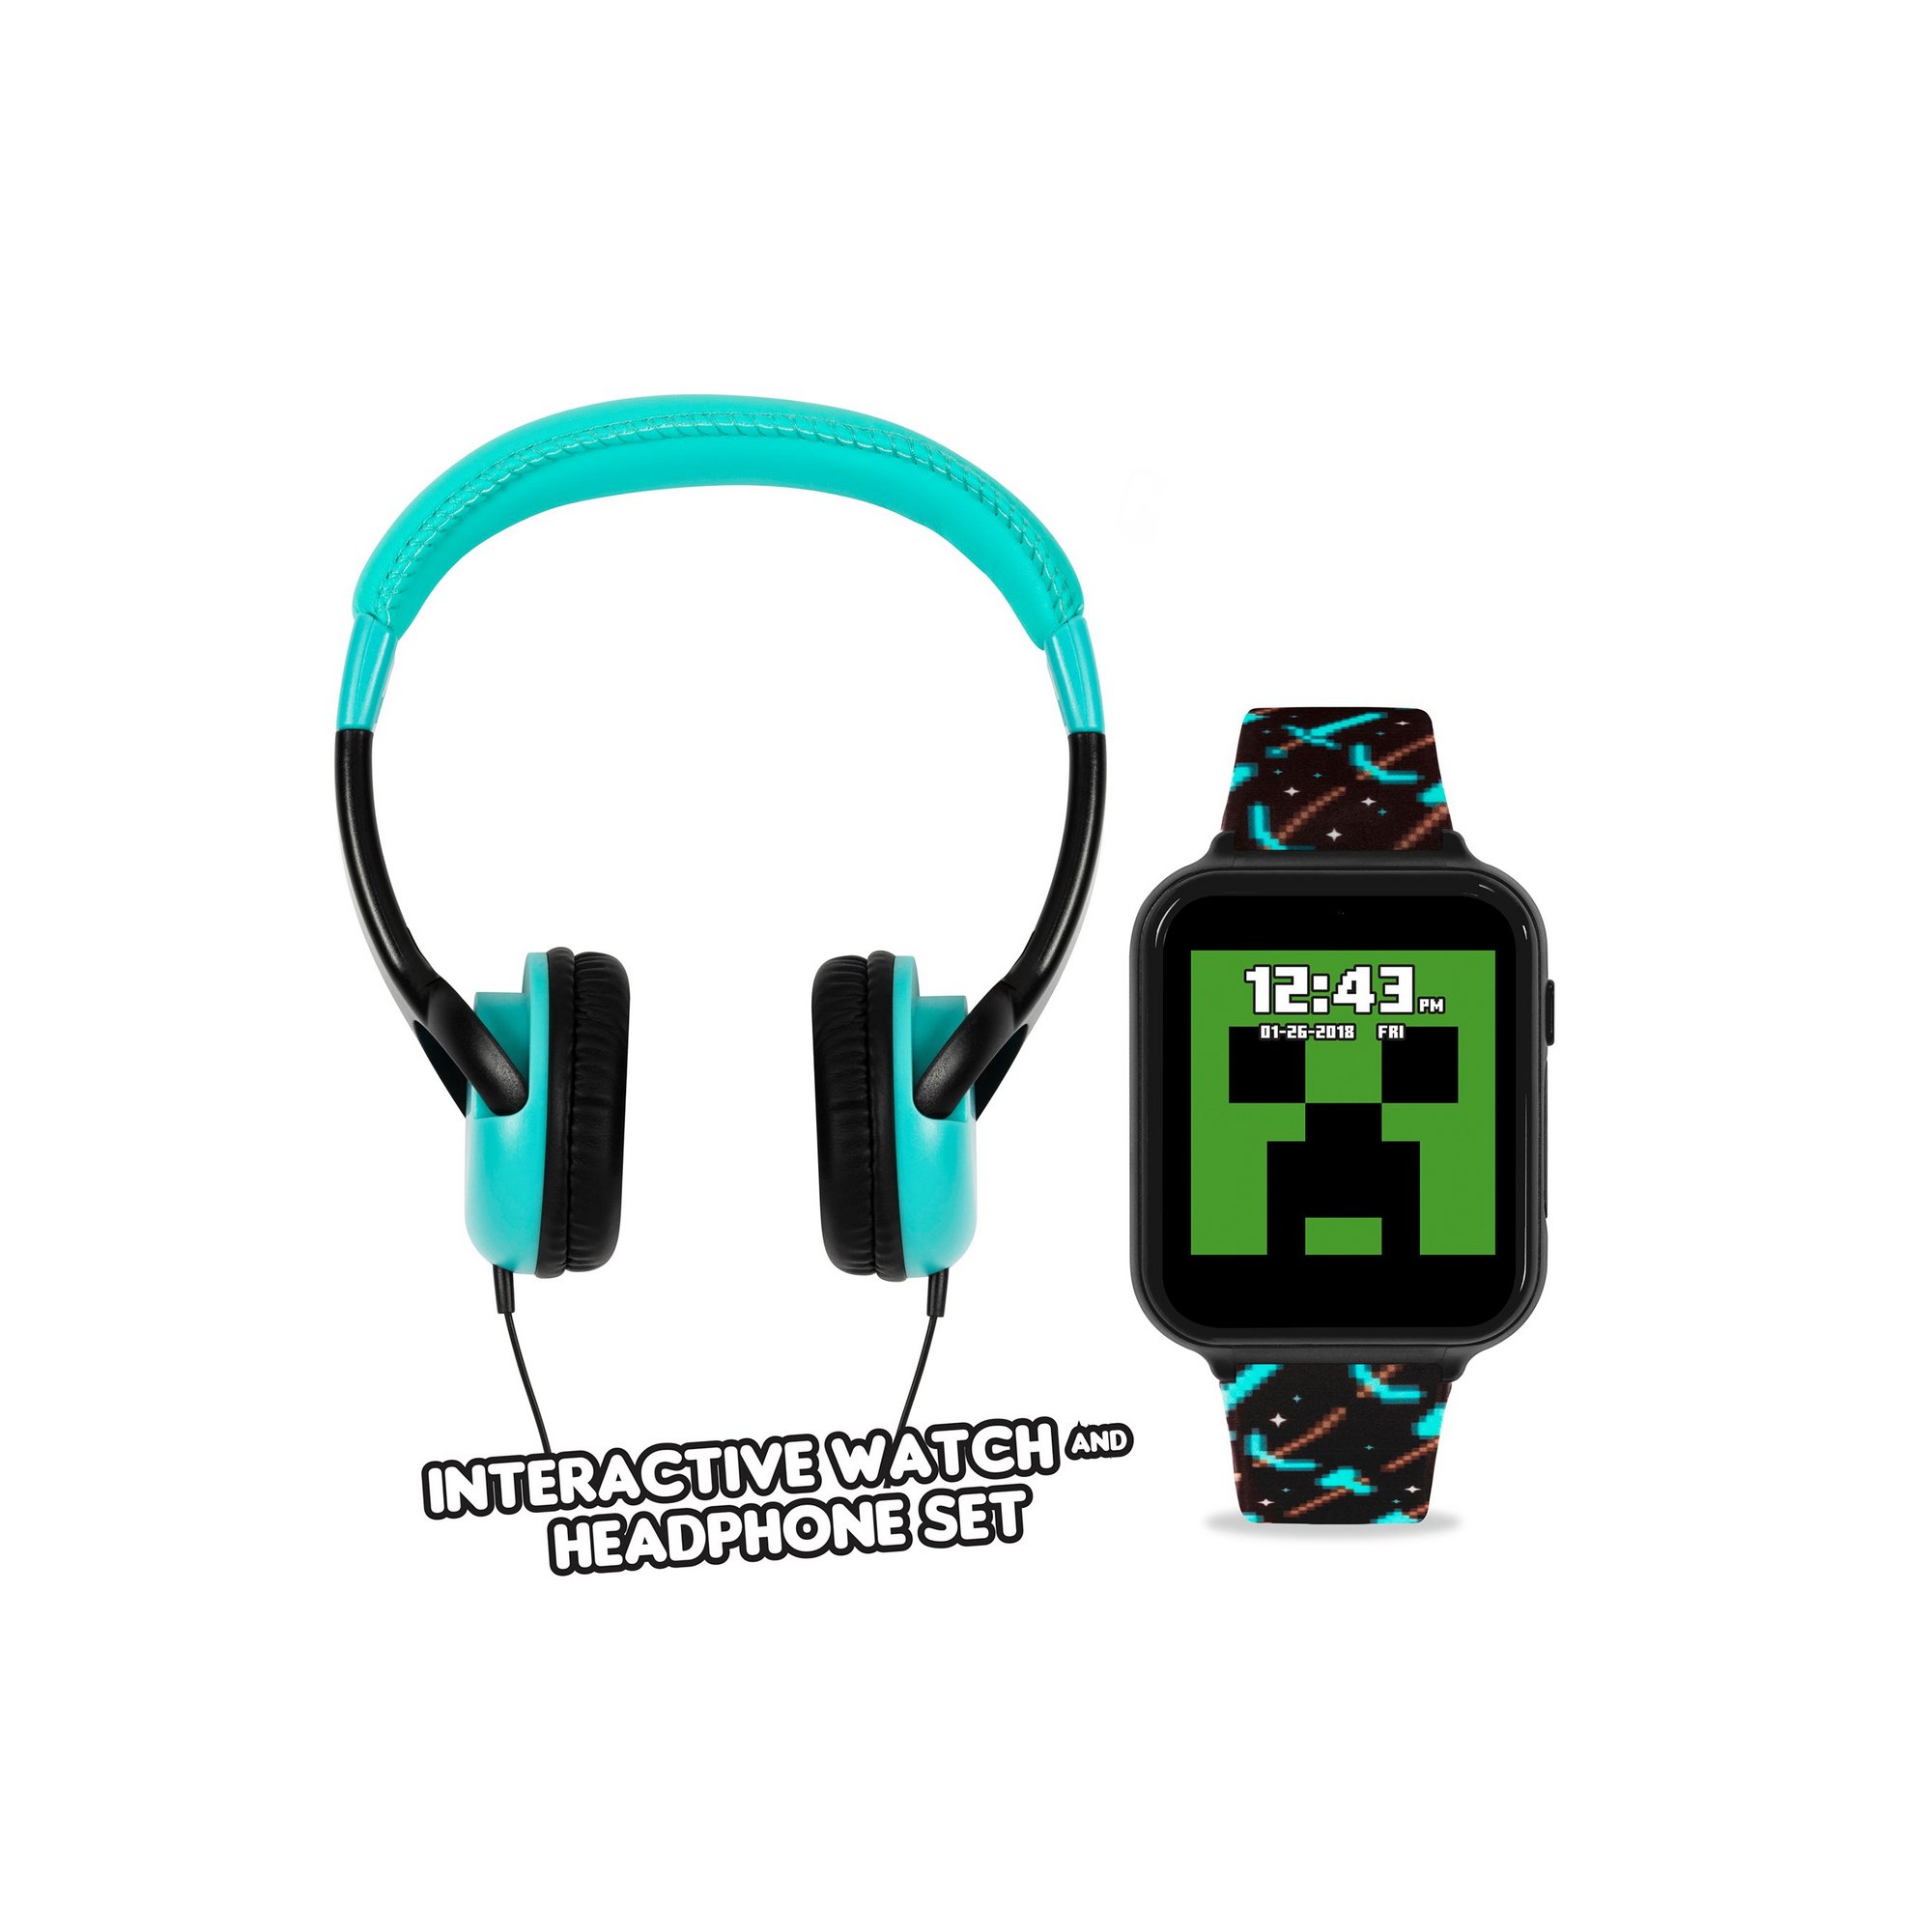 Minecraft Smart Watch and Headphones Set